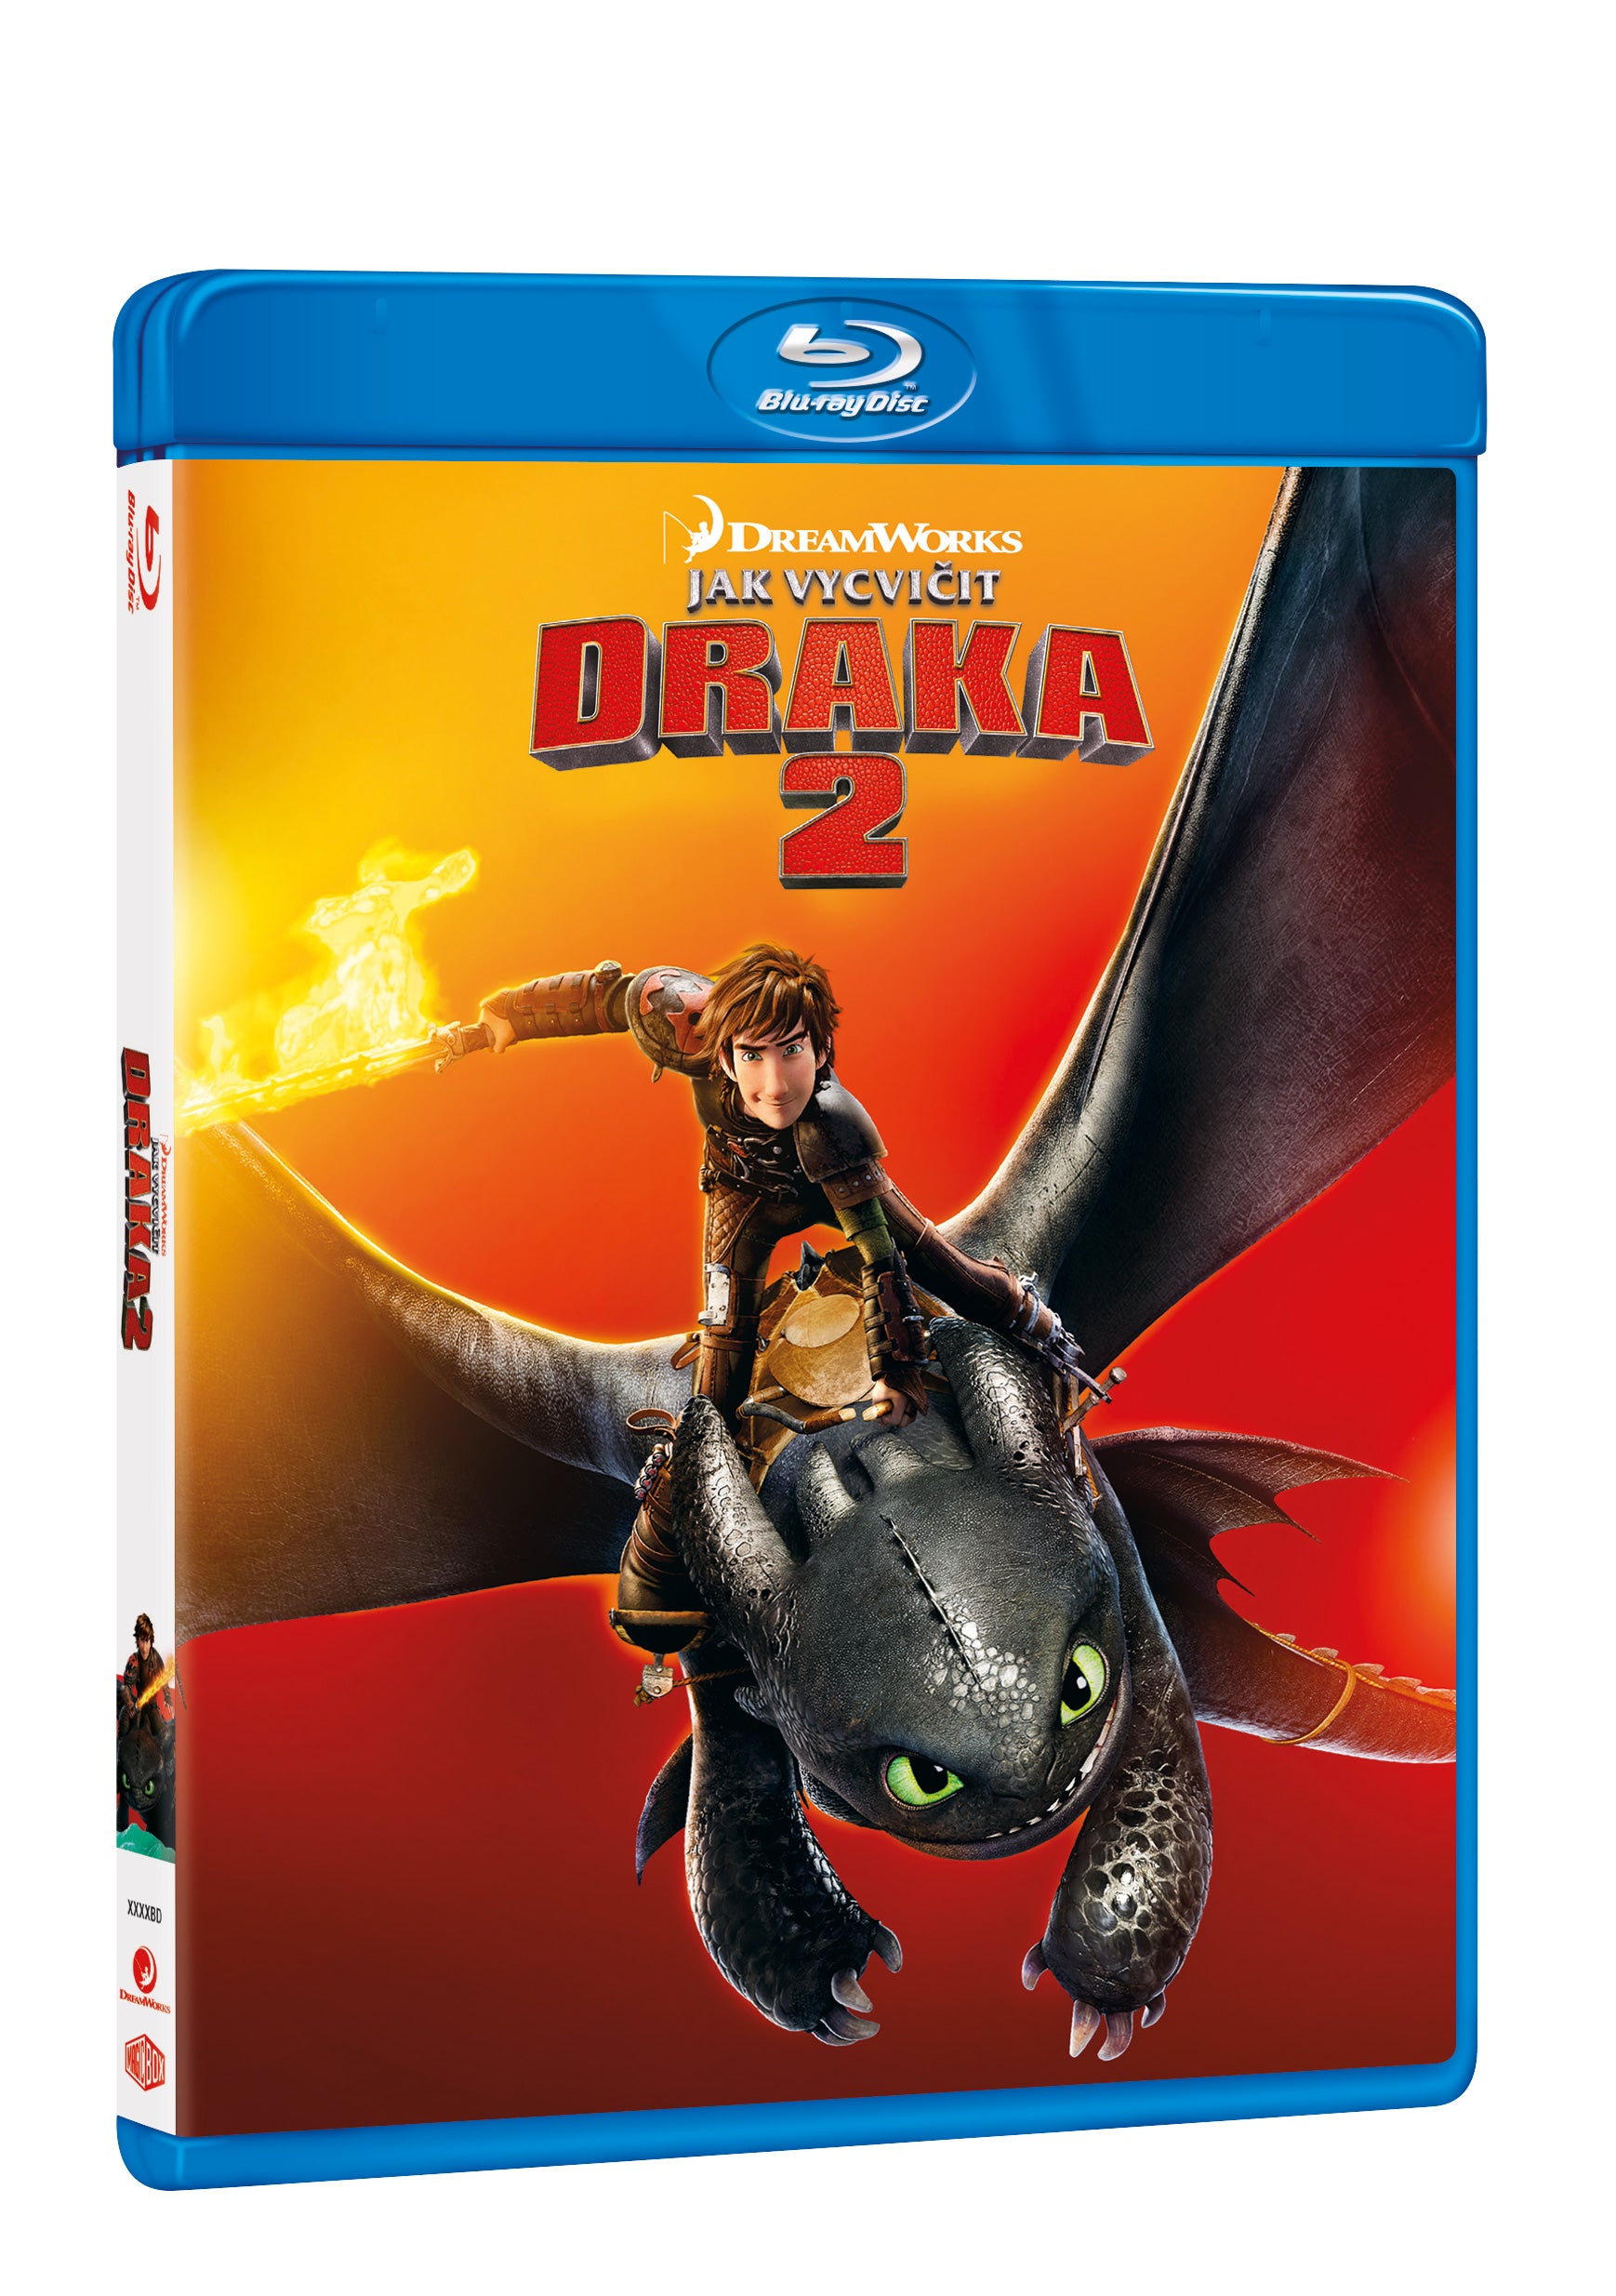 Jak vycvicit draka 2 BD / How to Train Your Dragon 2 - Czech version